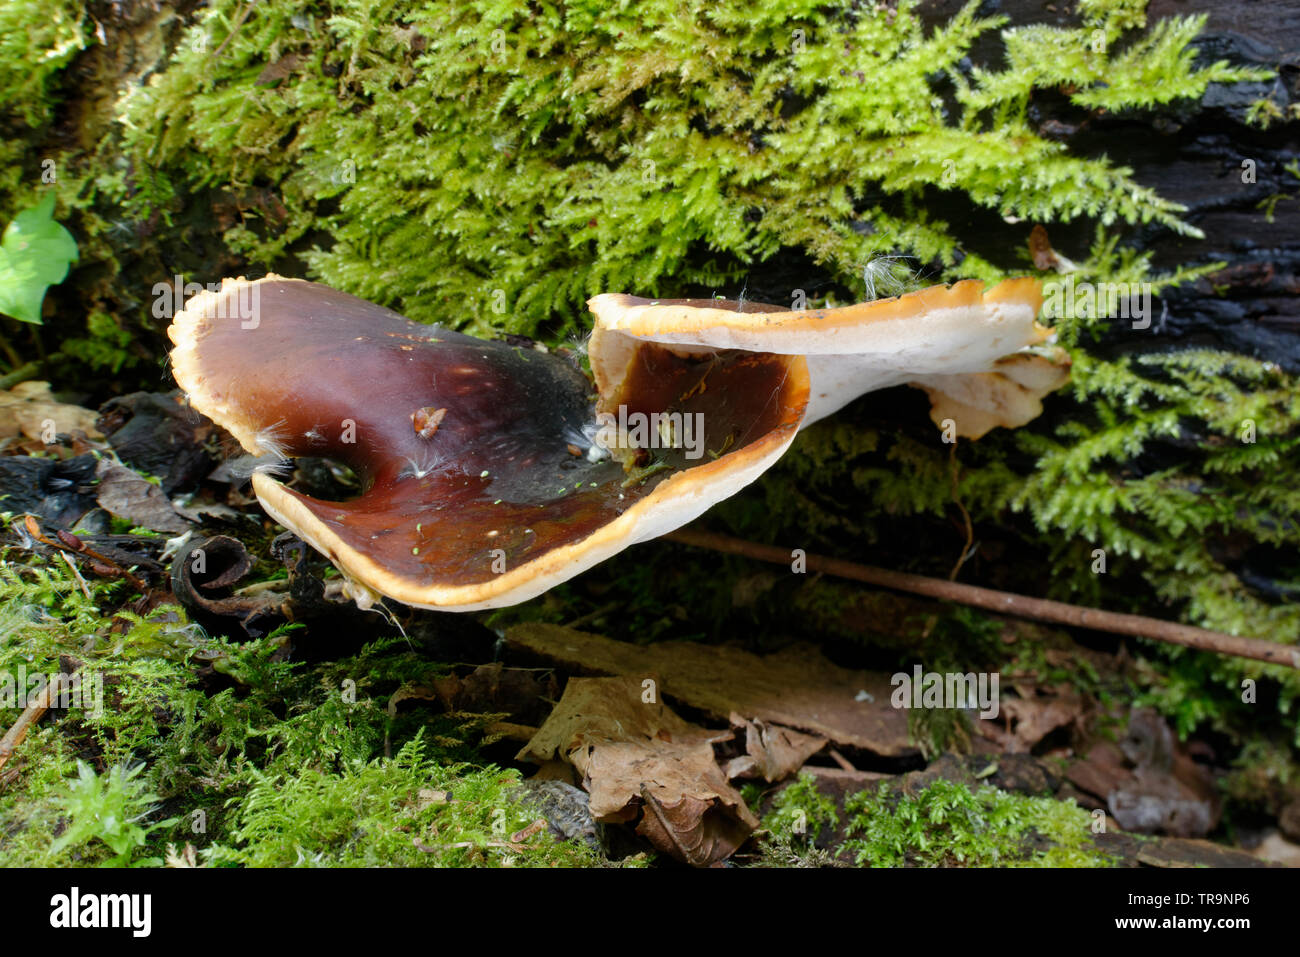 Bay Polypore - Polyporus durus  Bracket Fungus growing on Moss covered Log Stock Photo